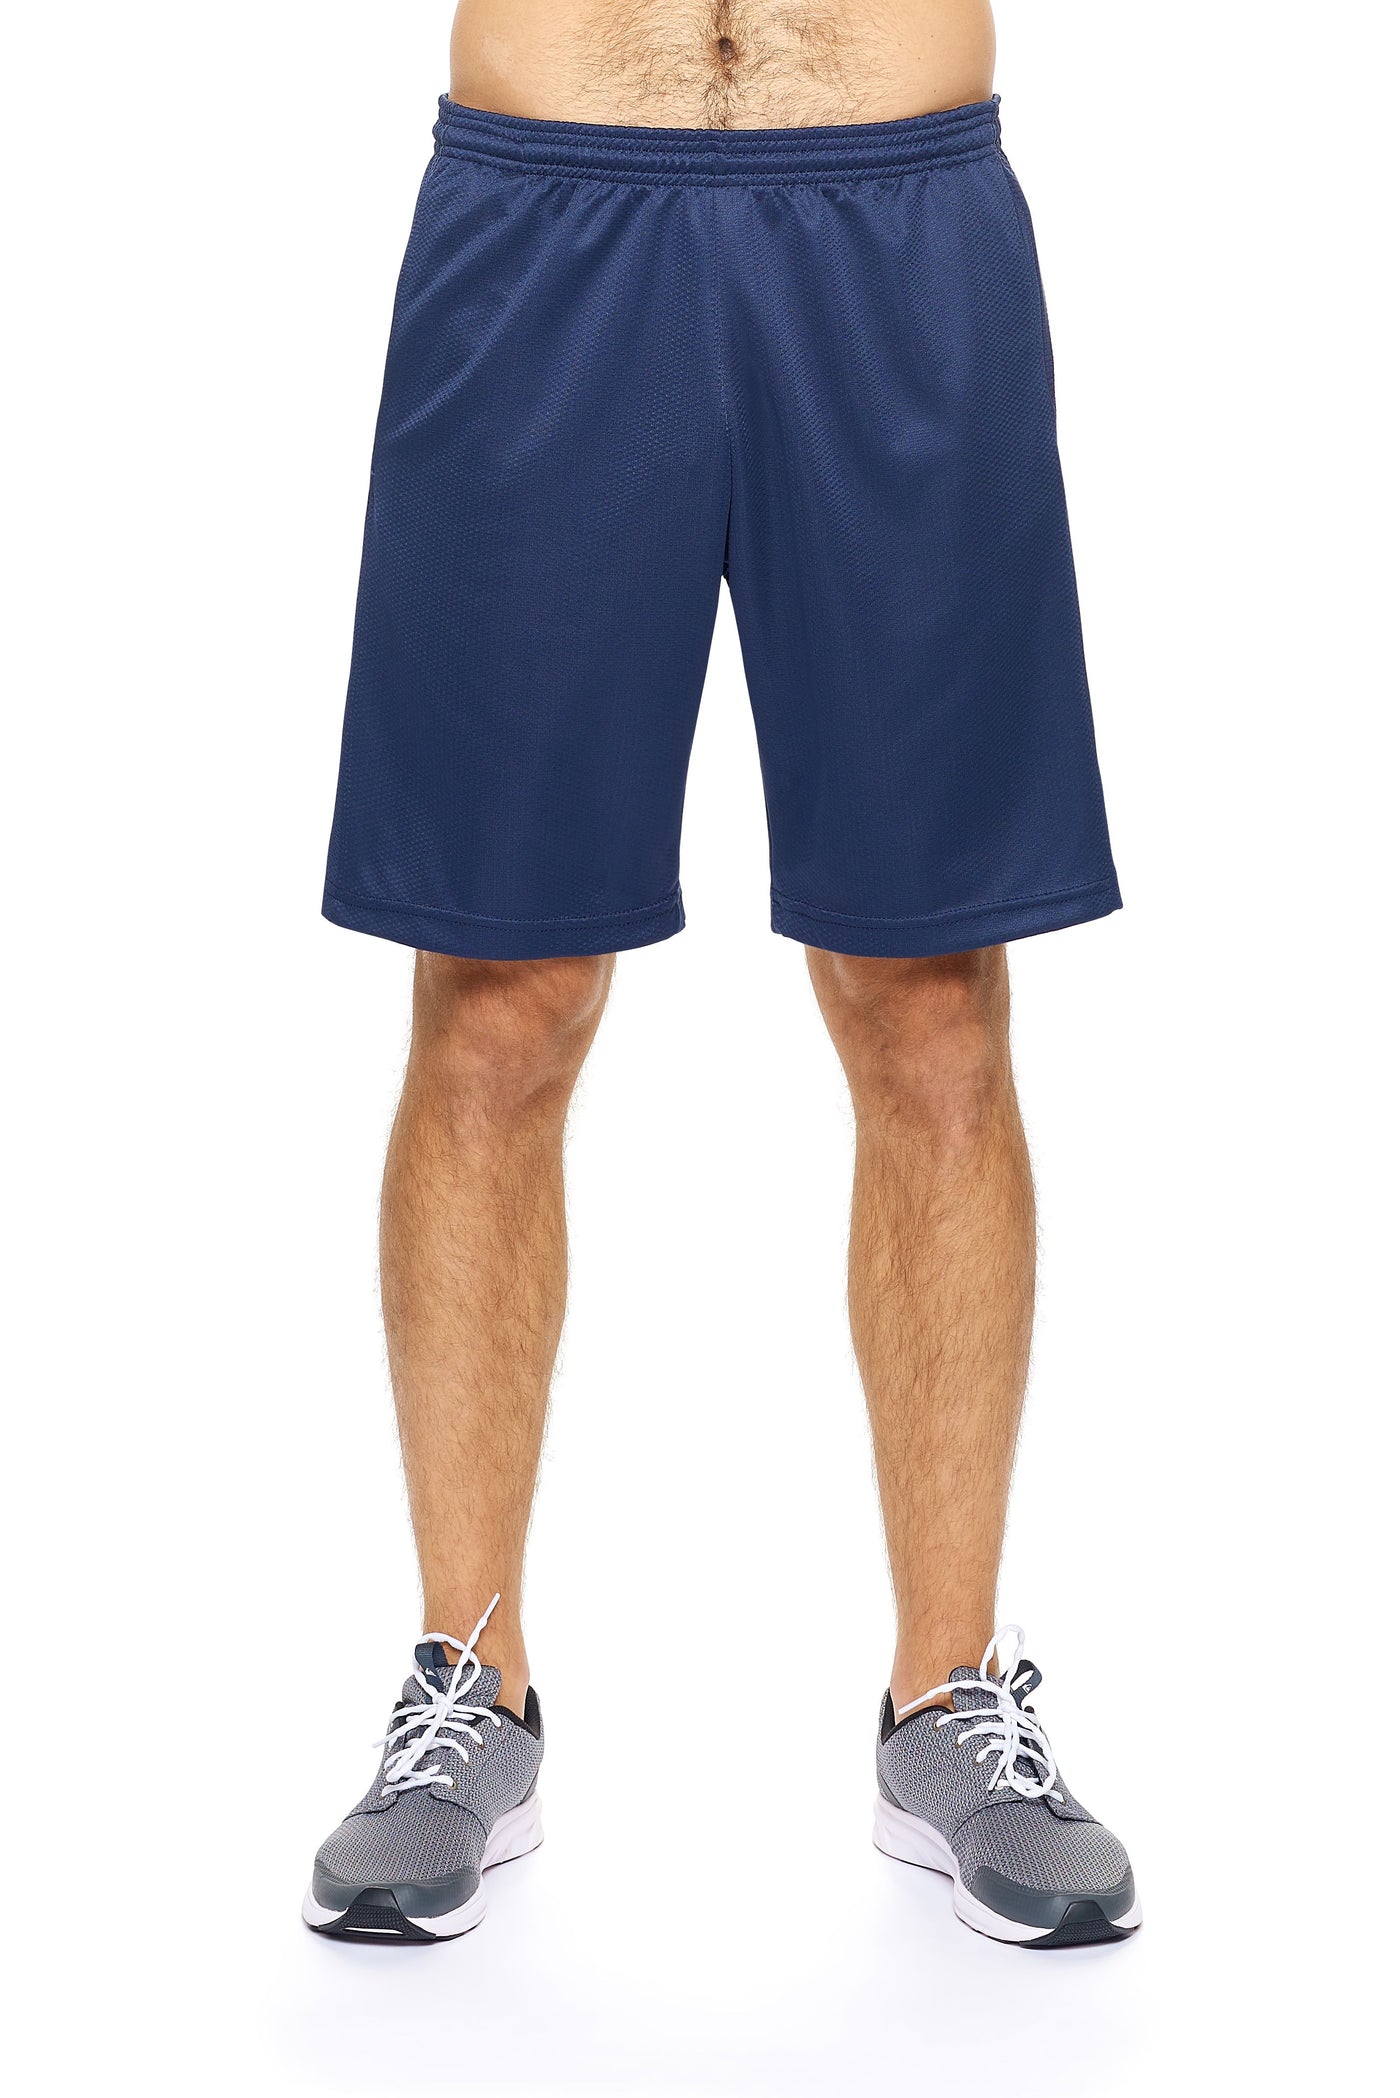 Expert Apparel Men's Active Sphere Shorts in Navy#color_navy